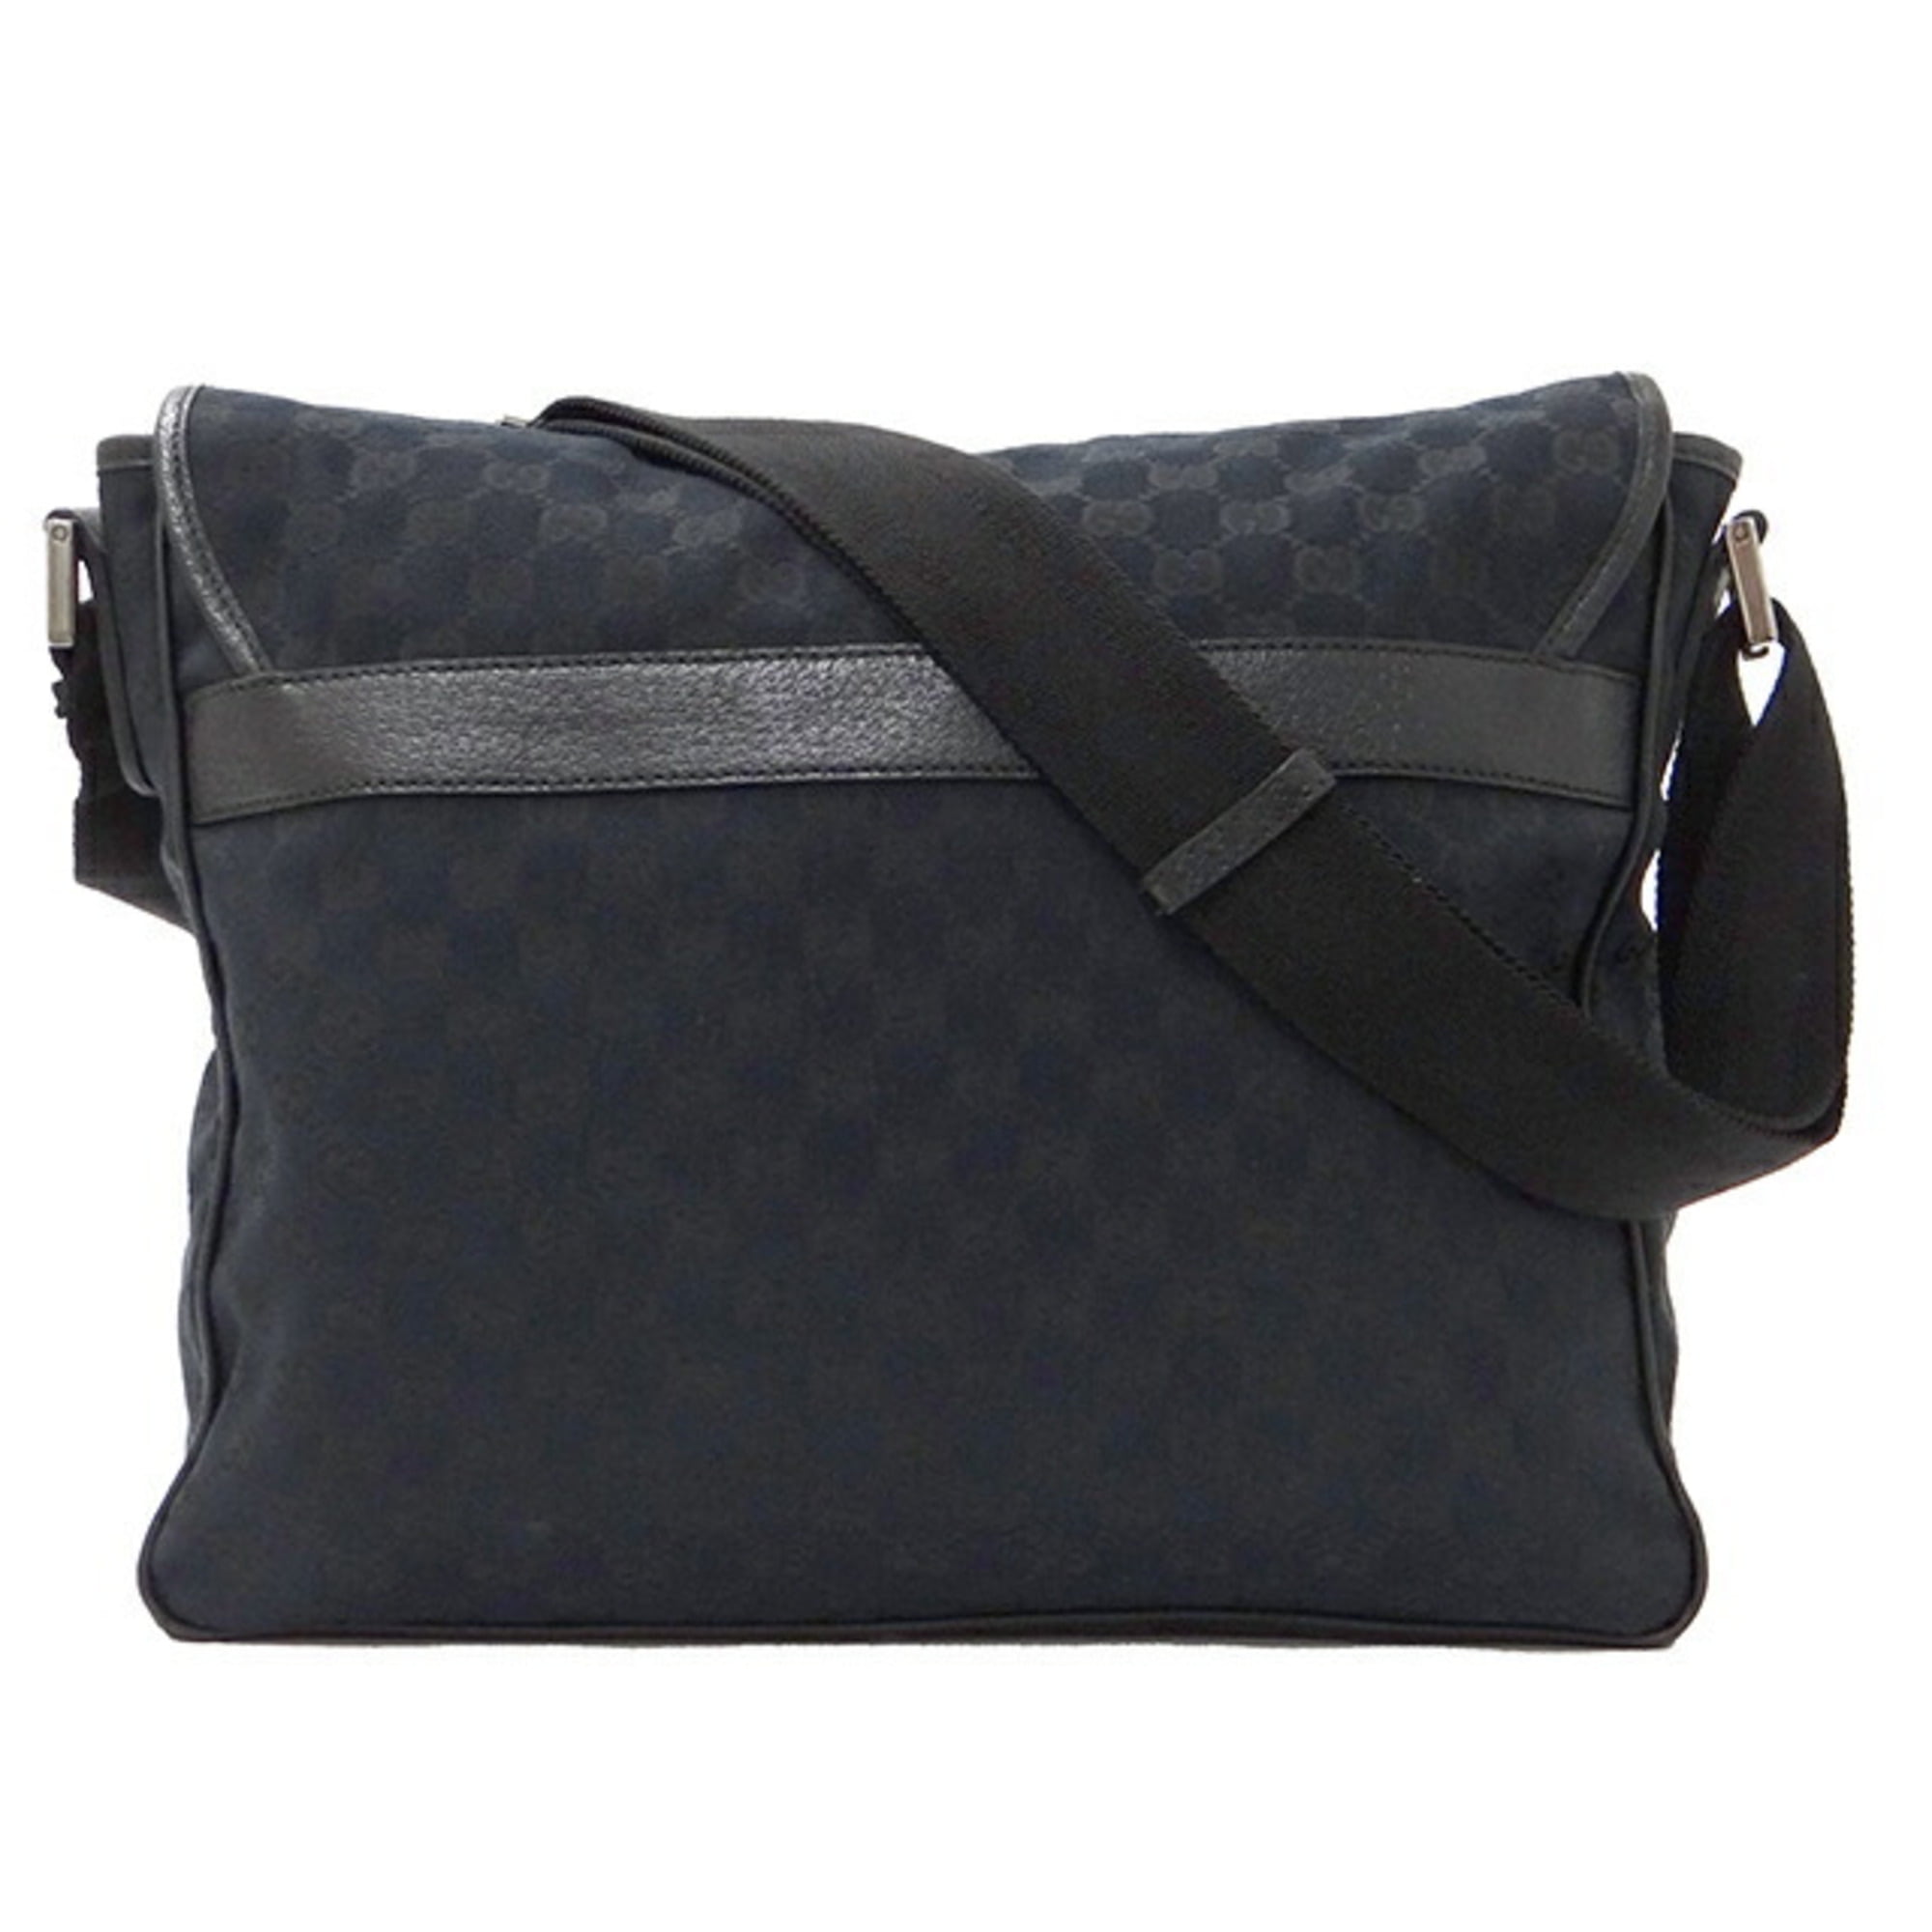 Gucci Crossbody Bags & Gucci Soho Handbags for Women | Authenticity  Guaranteed | eBay